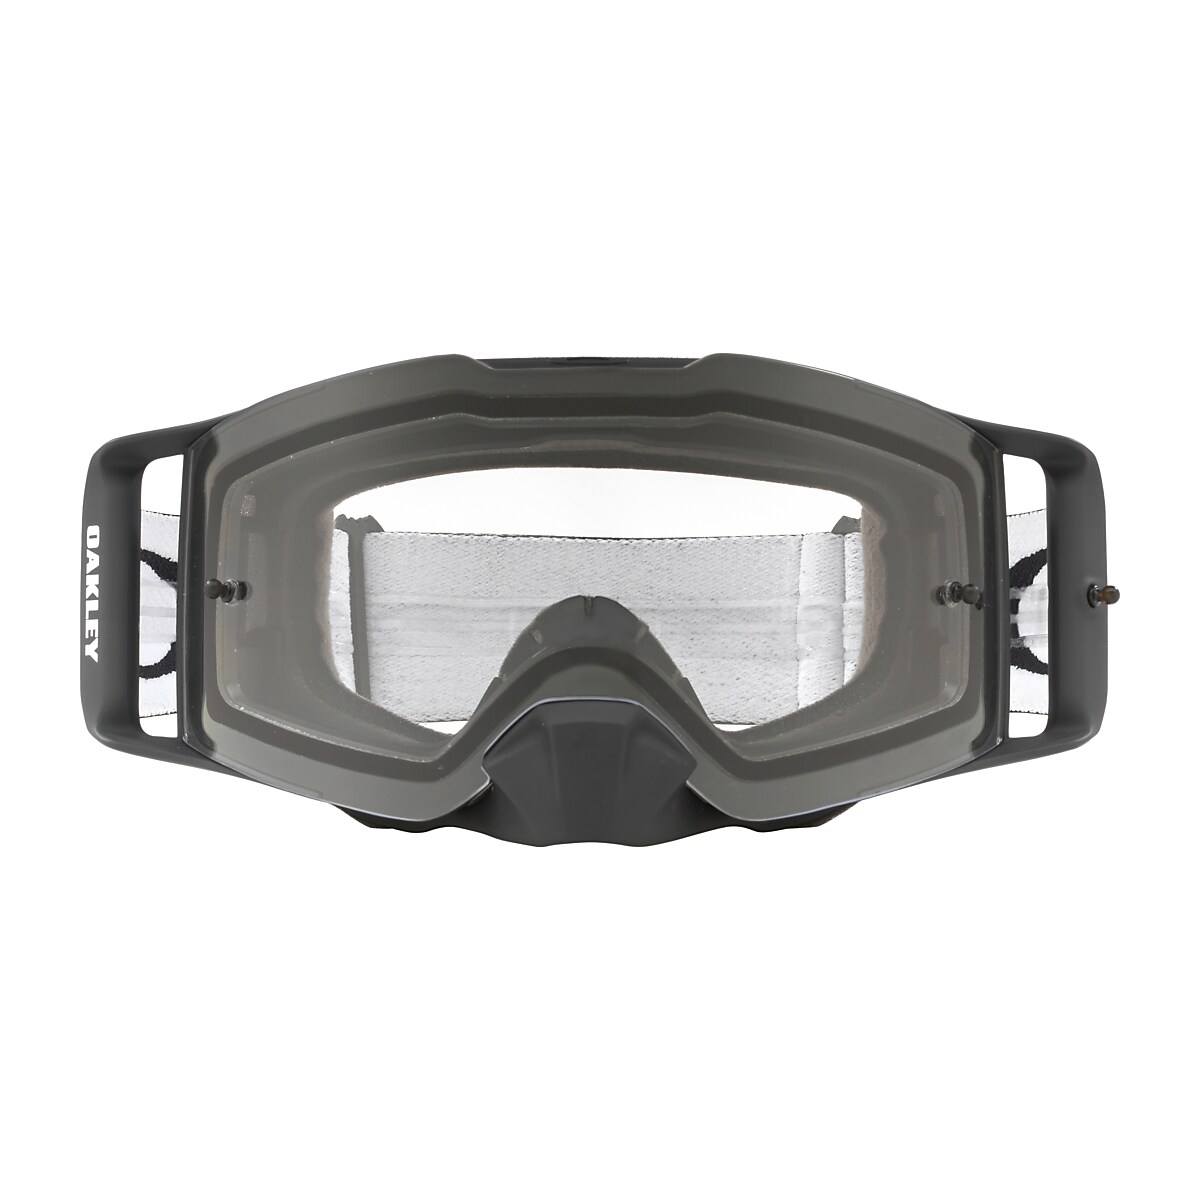 Oakley Front Line™ MX Goggles - Matte Black Speed - Clear - OO7087-01 |  Oakley US Store